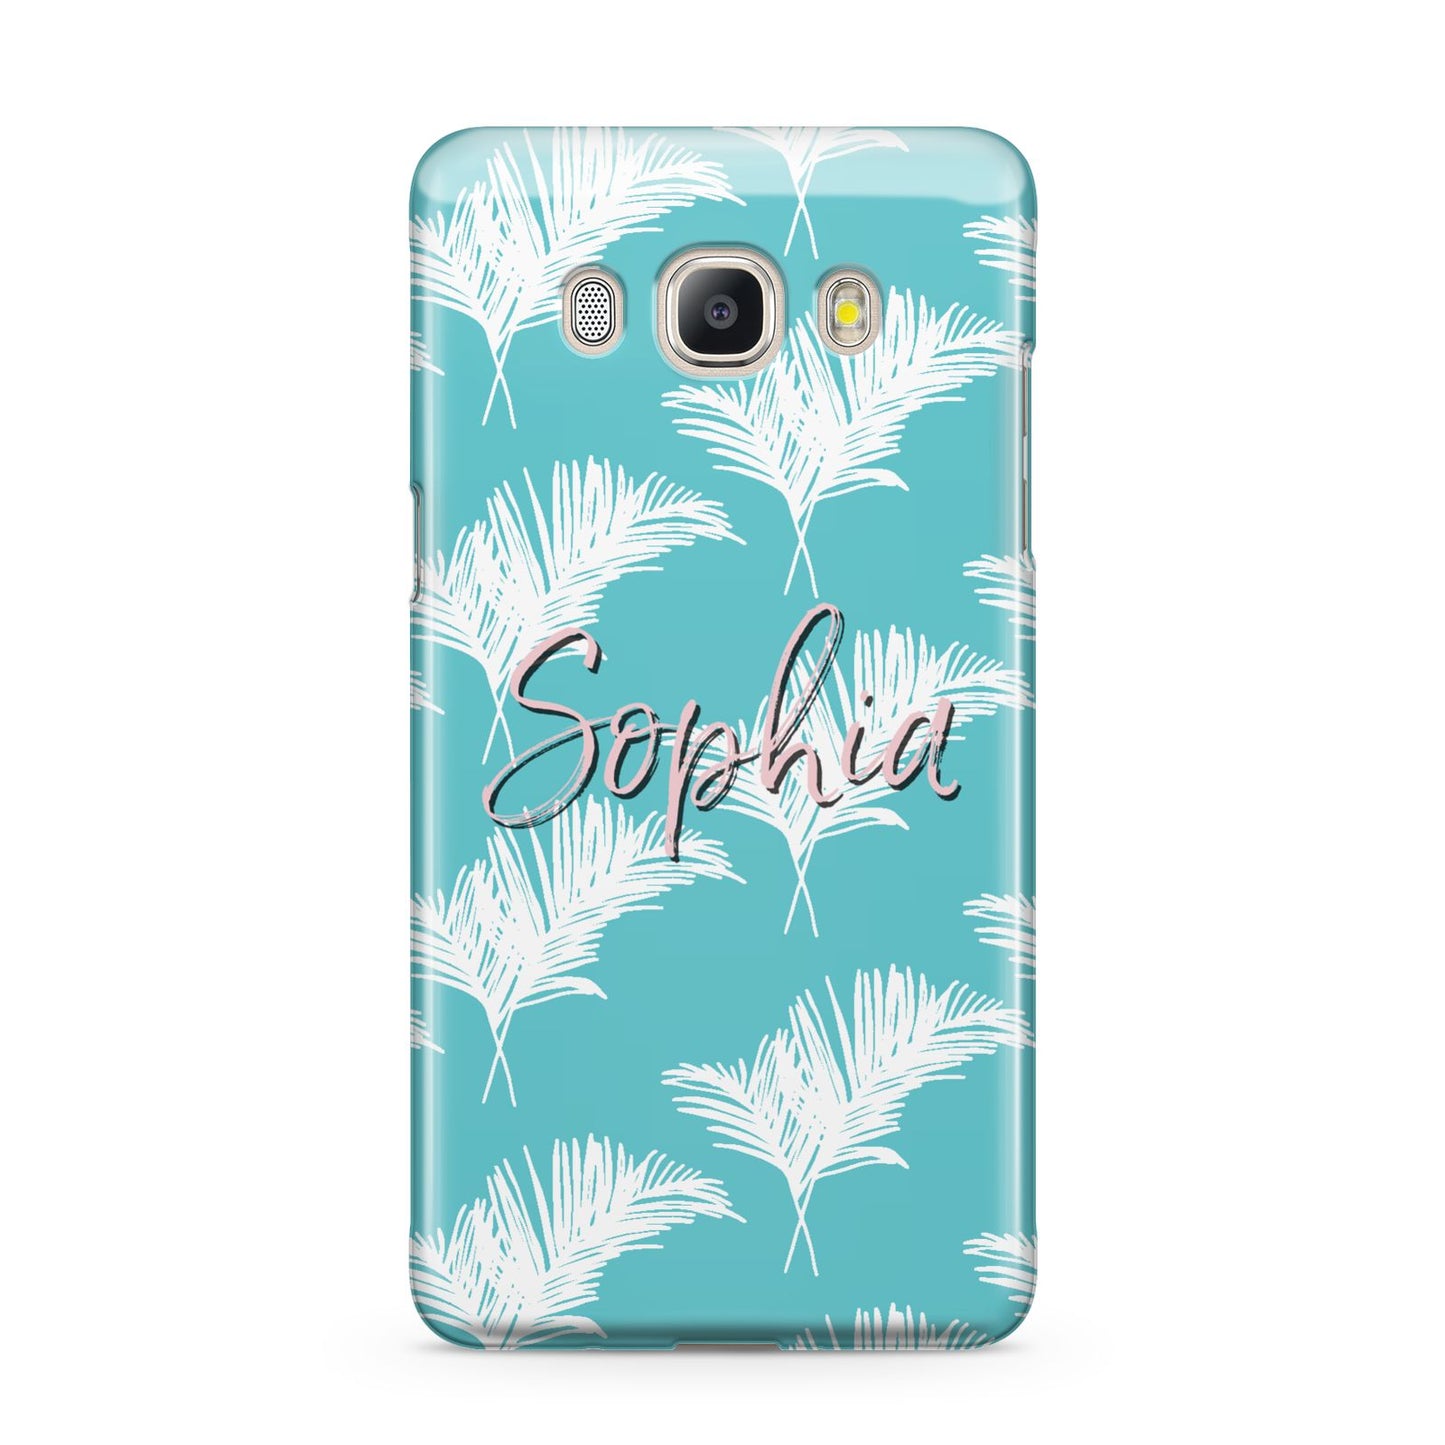 Personalised Blue White Tropical Foliage Samsung Galaxy J5 2016 Case